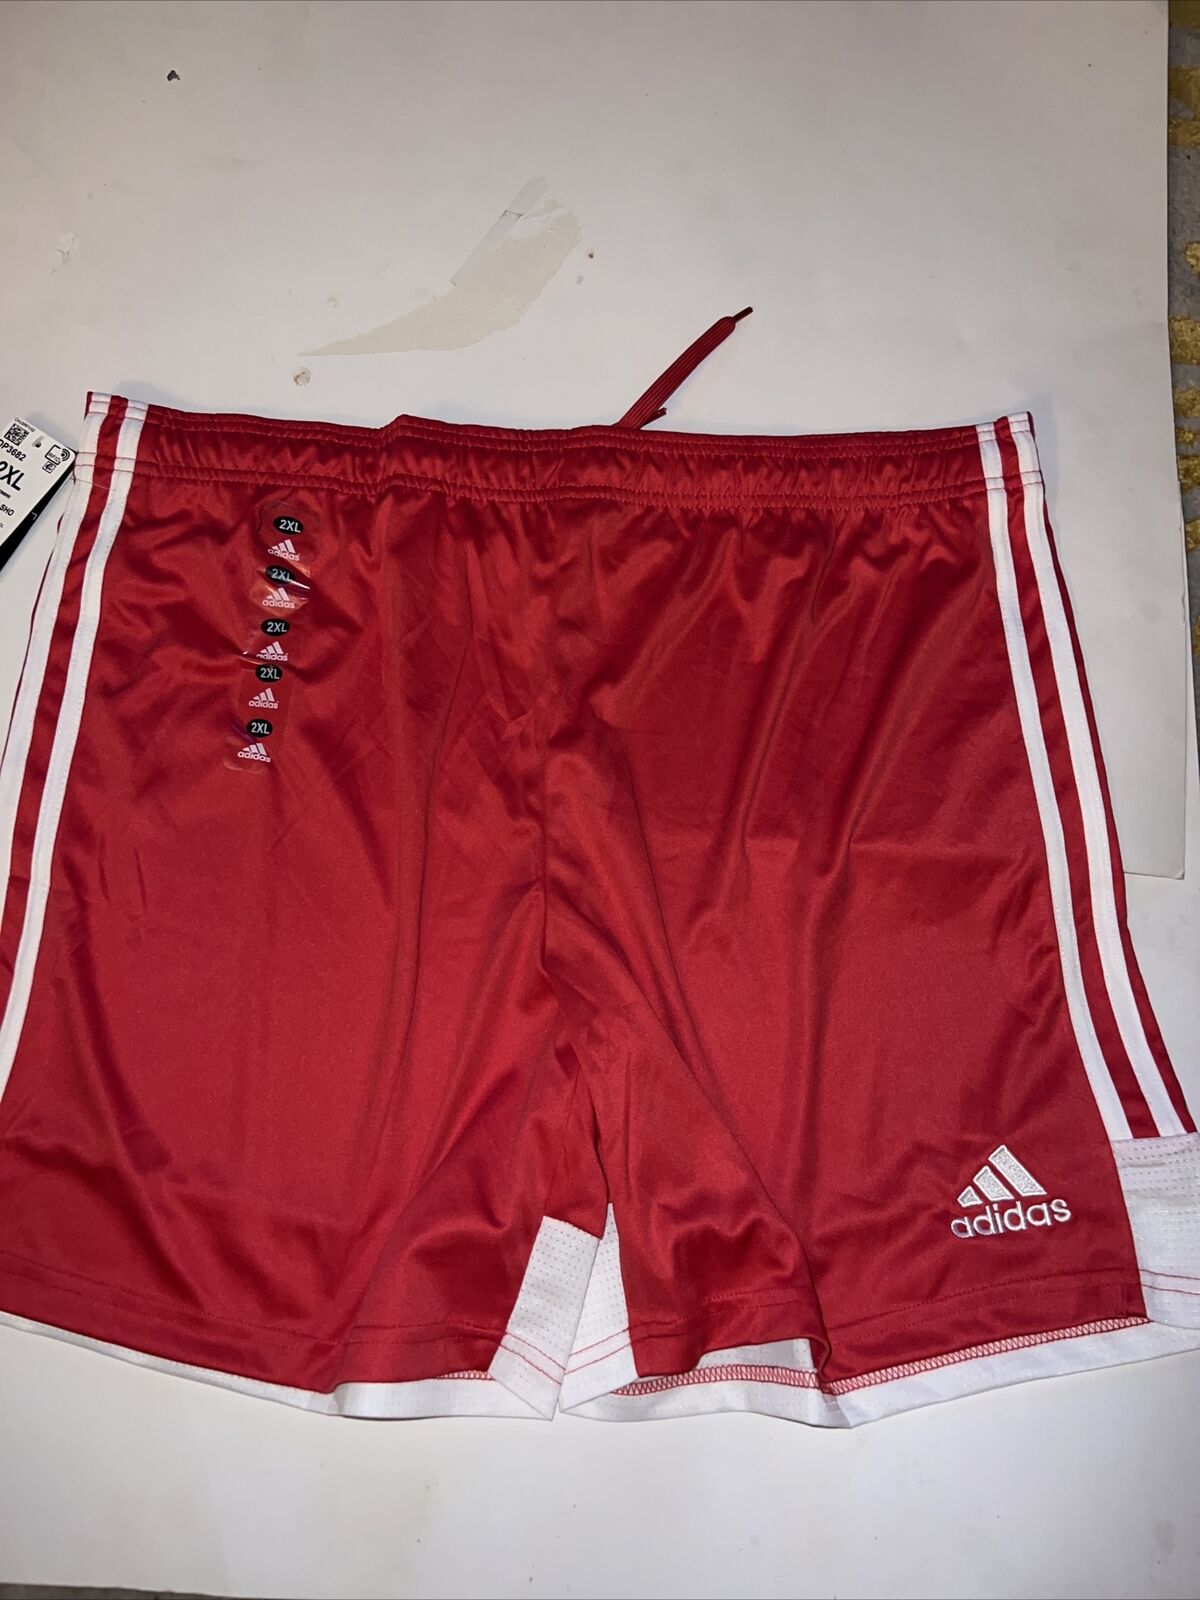 NWT DP3682 Men’s Adidas TASTIGO 19 Soccer SHORTS Climalite Red Sz 2XL $25